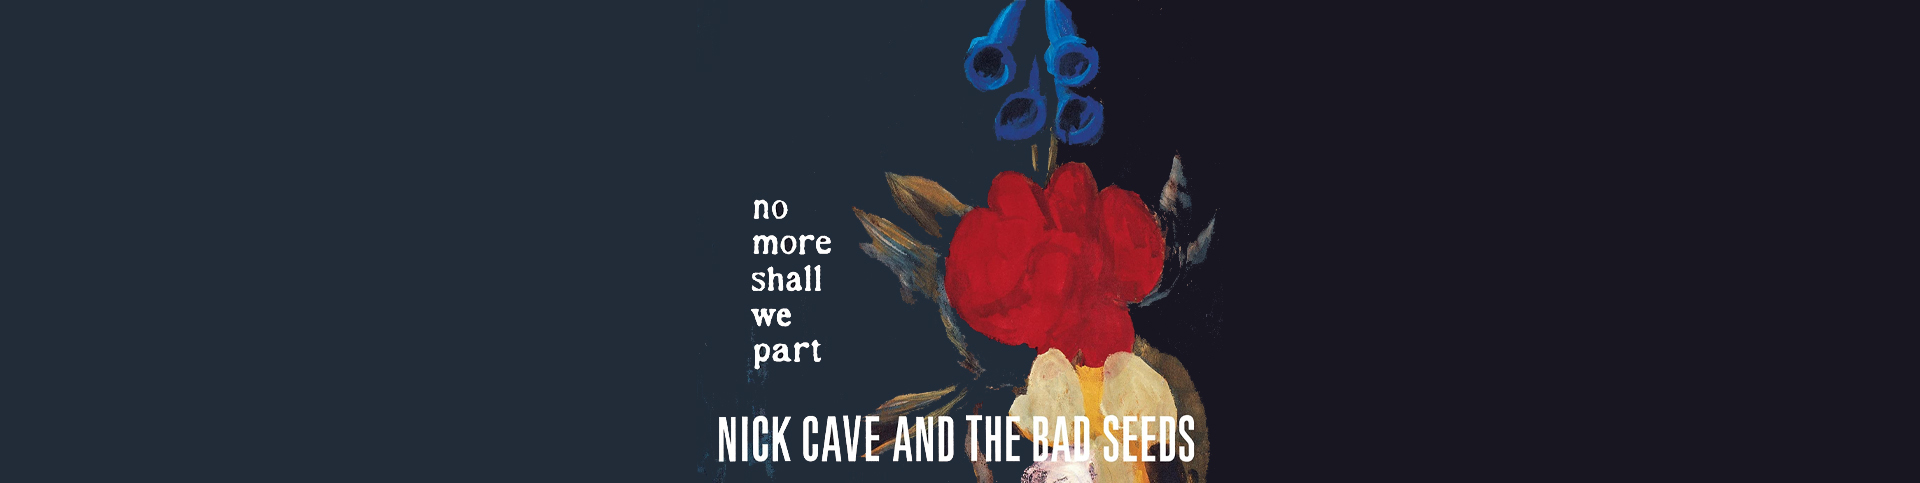 nick cave no more